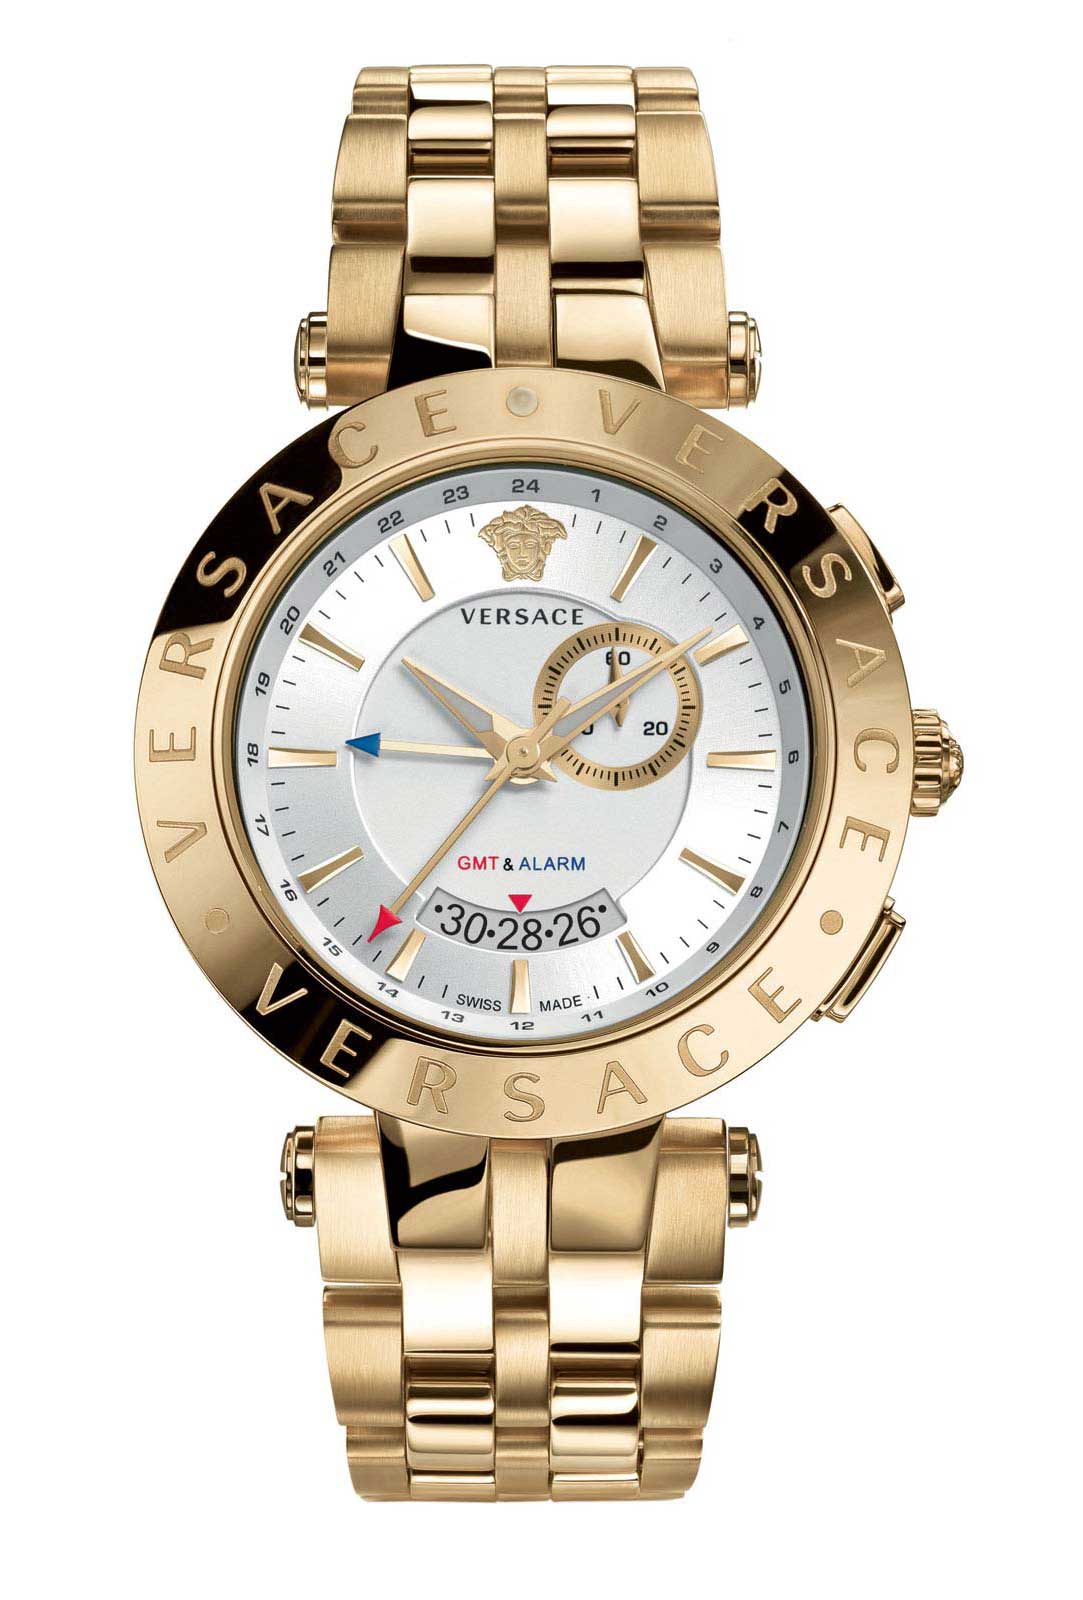 Versace QUARTZ GMT watch 8176-1990 GOLD WHITE/SILVER DIAL